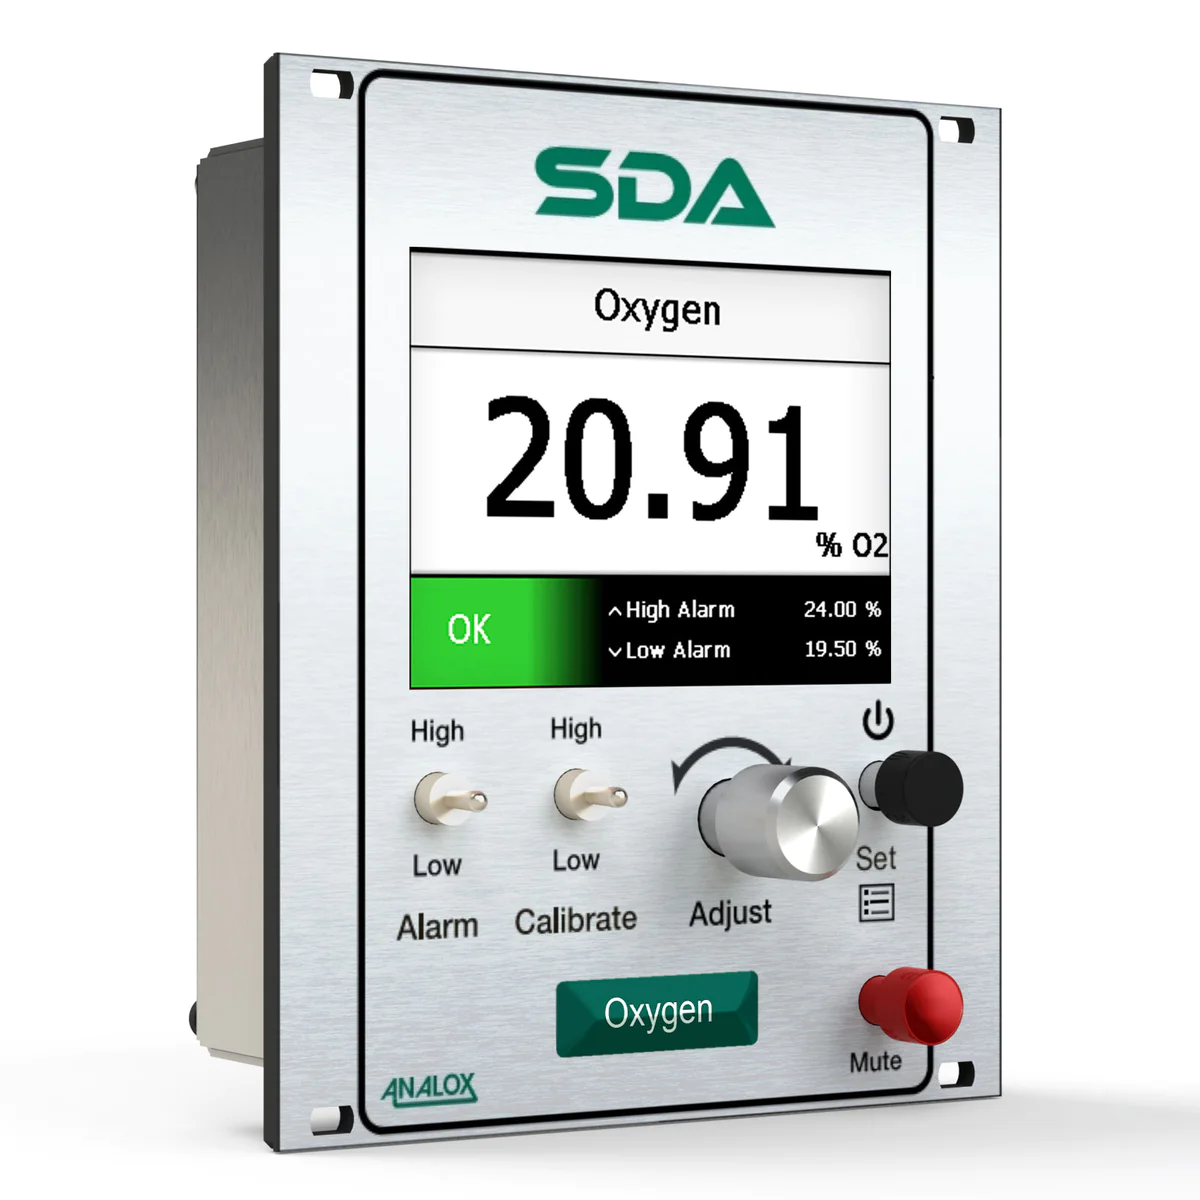 SDA gas monitor